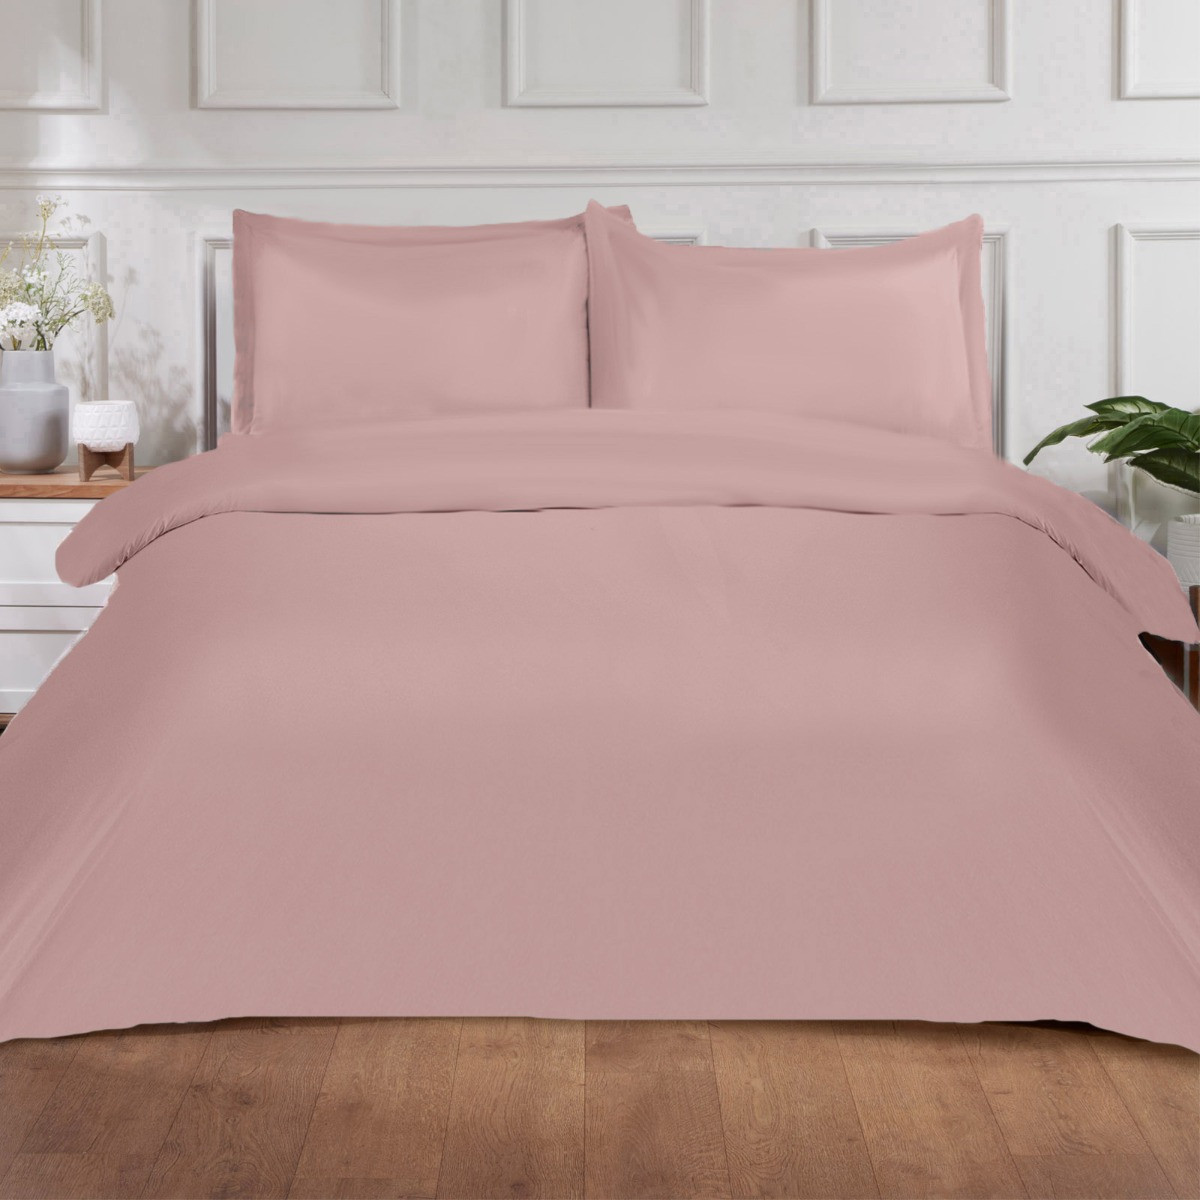 Brentfords Plain Dye Duvet Cover Set with Oxford Pillowcase - Blush Pink>